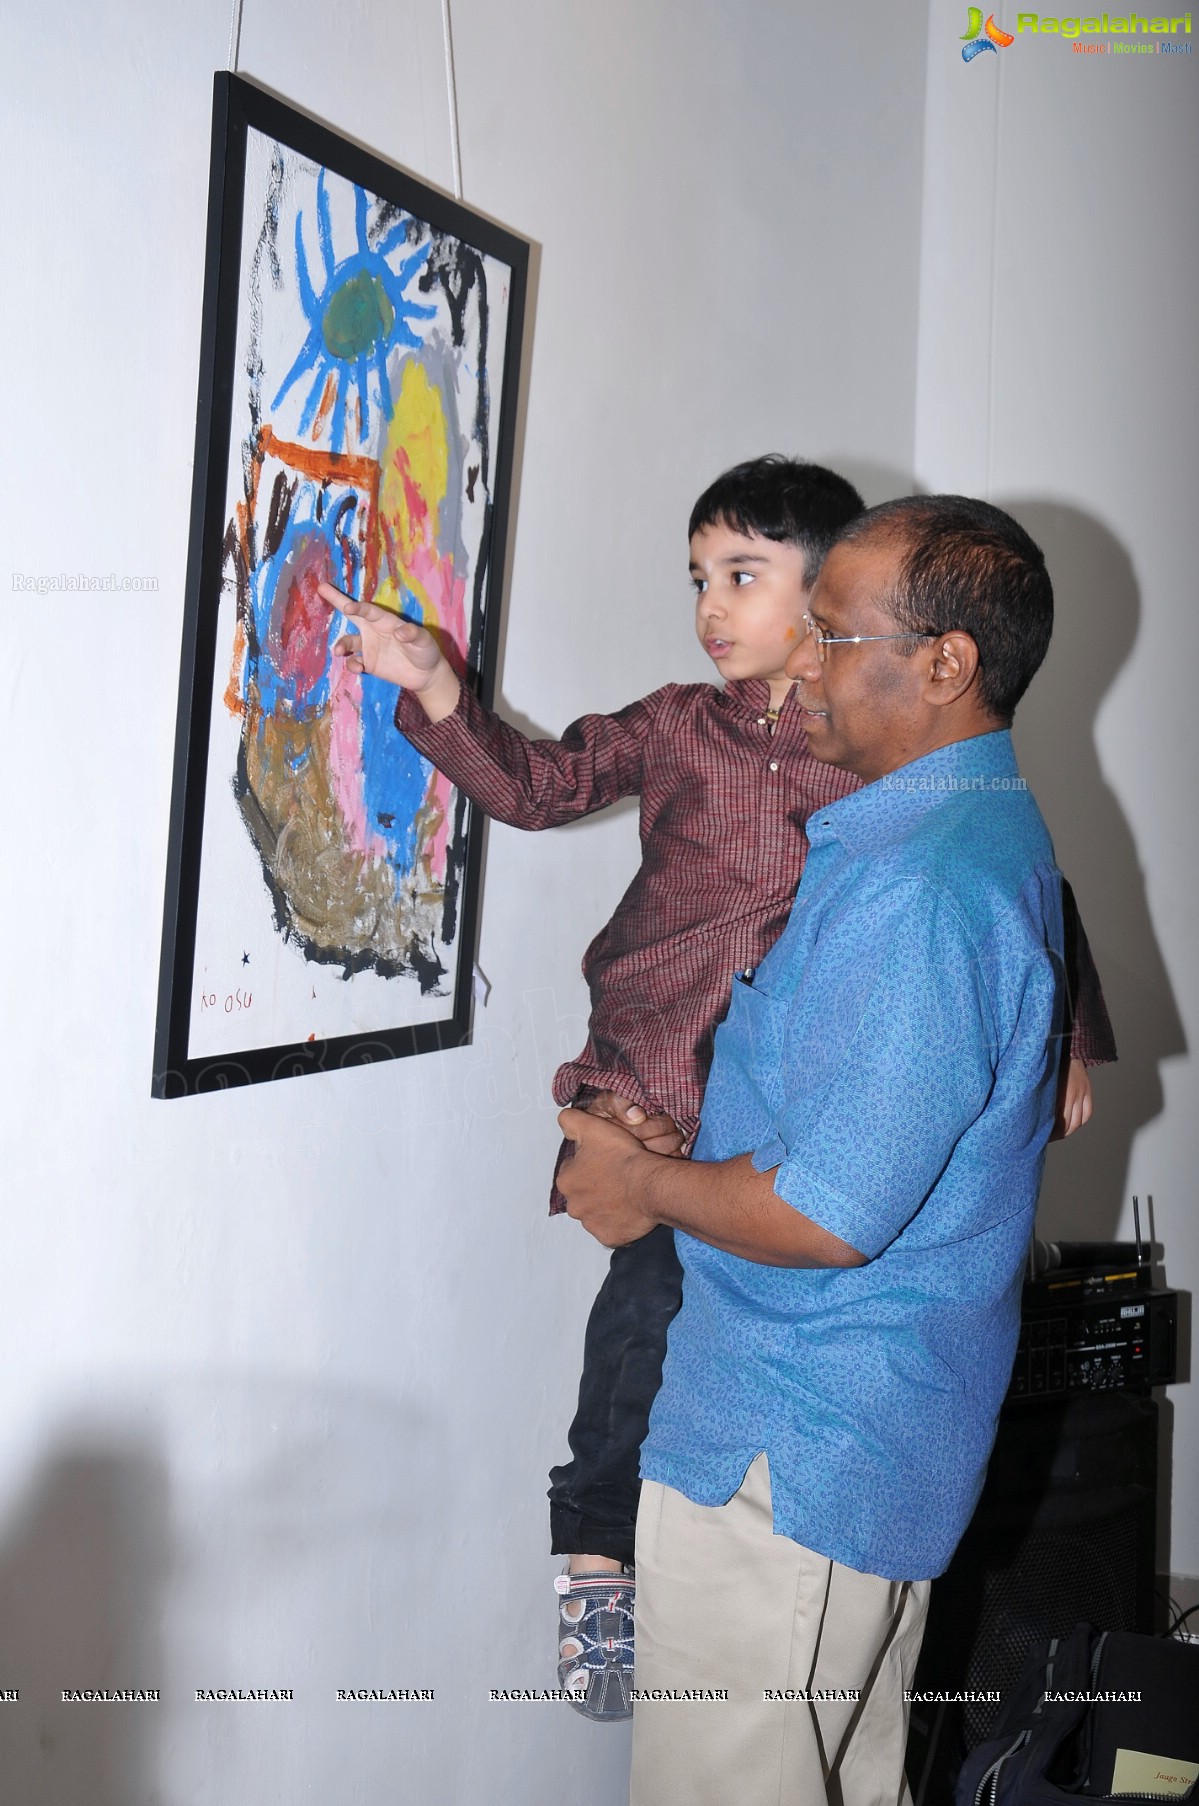 Sravanthi Juluri's 'Jaago Stree Art Gallery' at State Art Gallery, Hyderabad